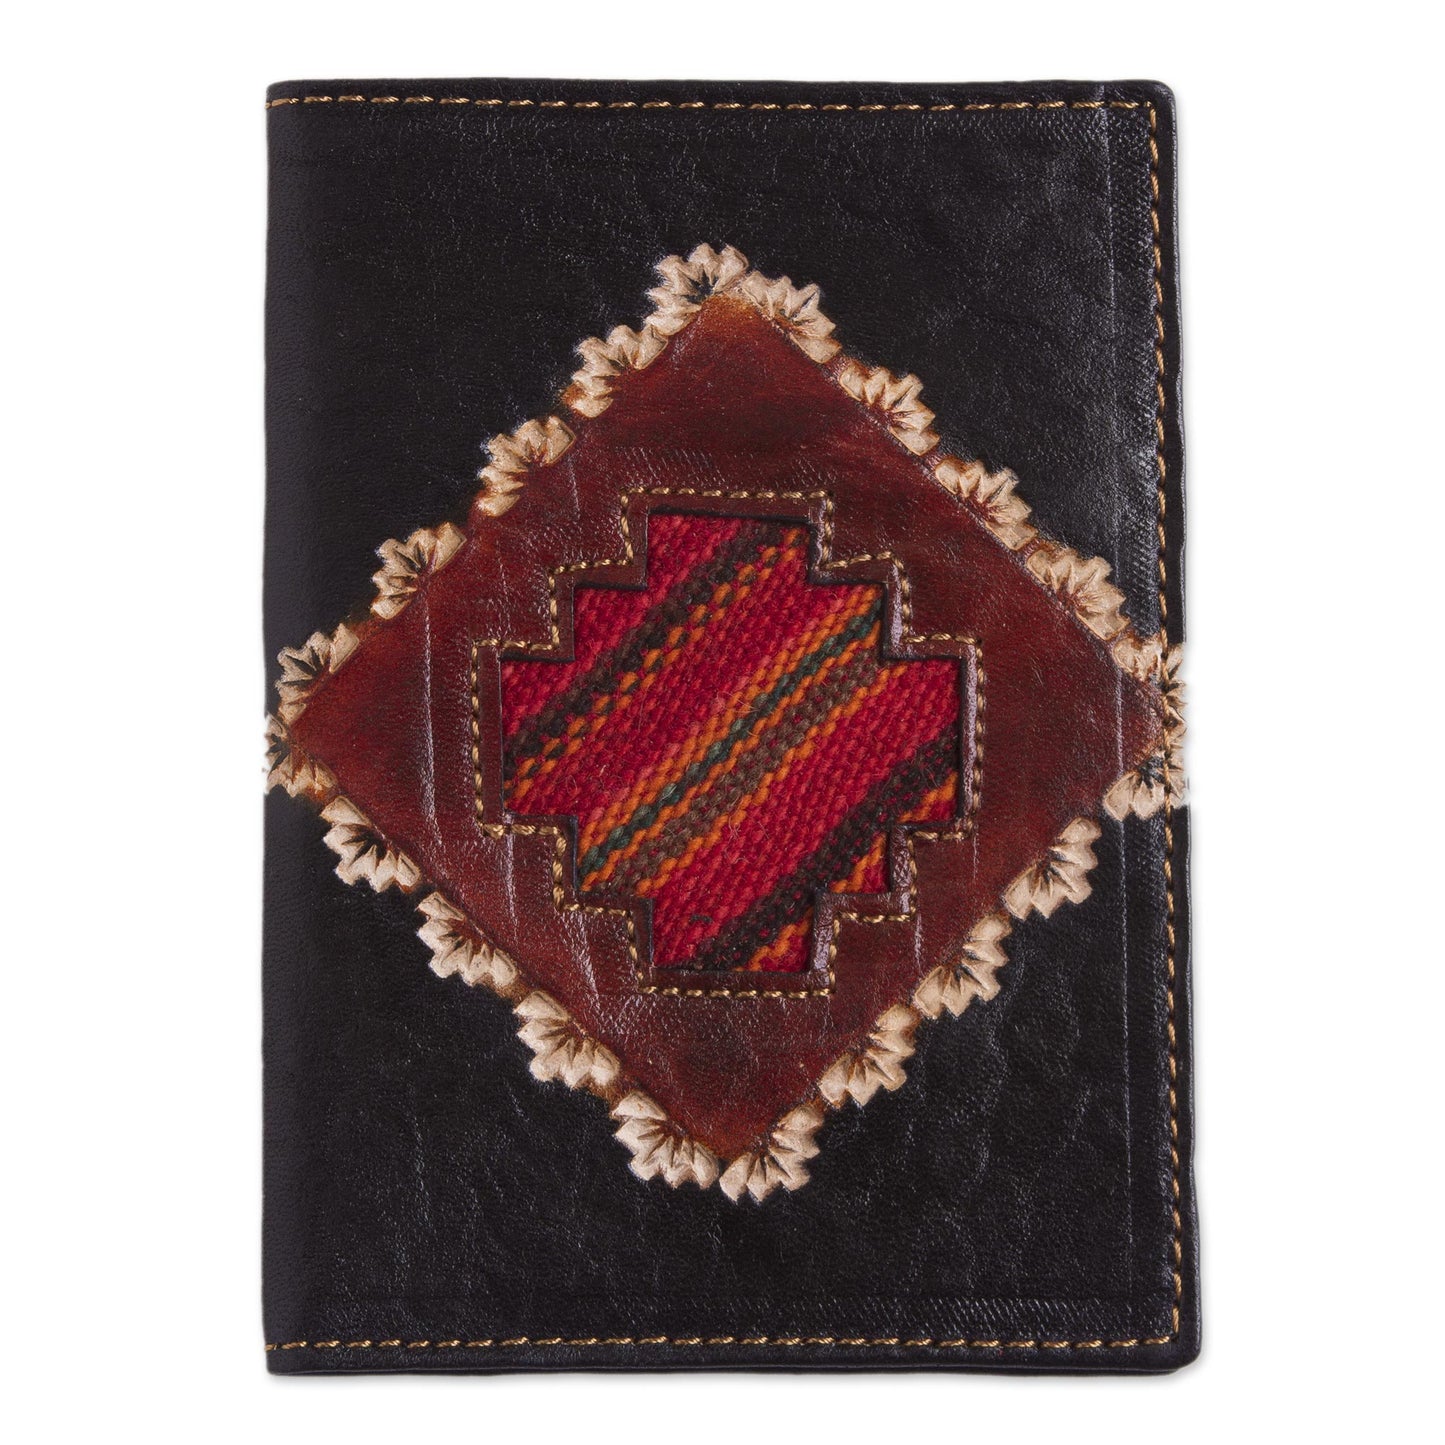 Inca Traveler Dark Brown Leather Passport Cover with Incan Cross Design